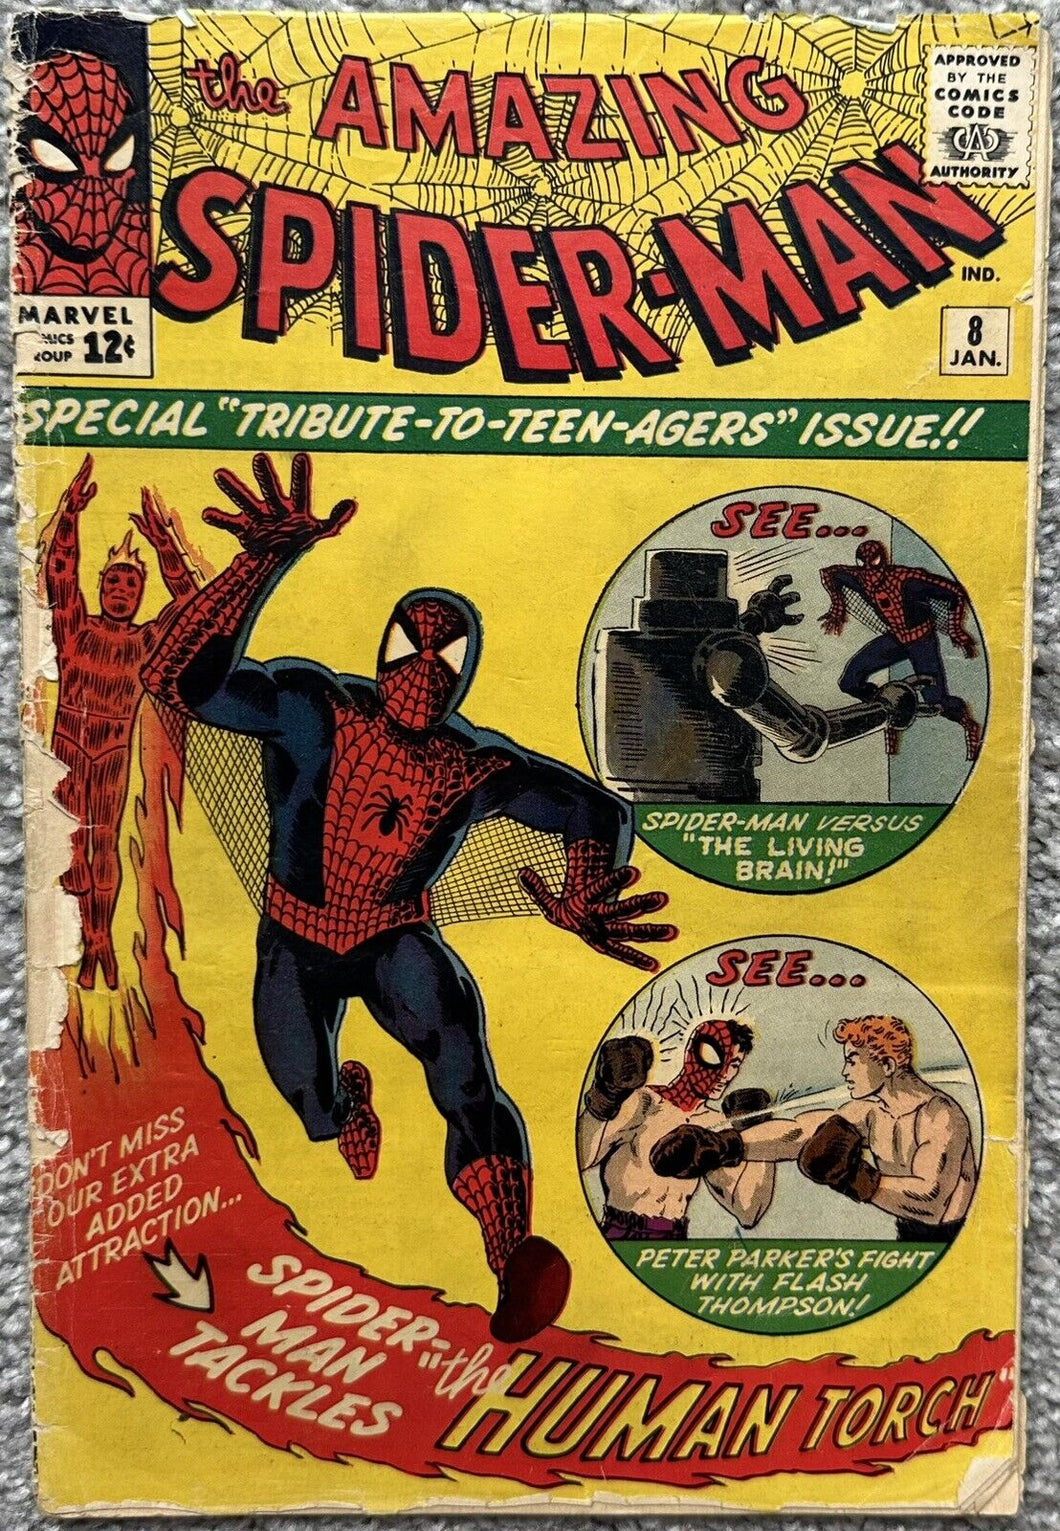 THE AMAZING SPIDER-MAN #8 (MARVEL,1964) 1st appearance of the Living Brain. Steve Ditko Art.